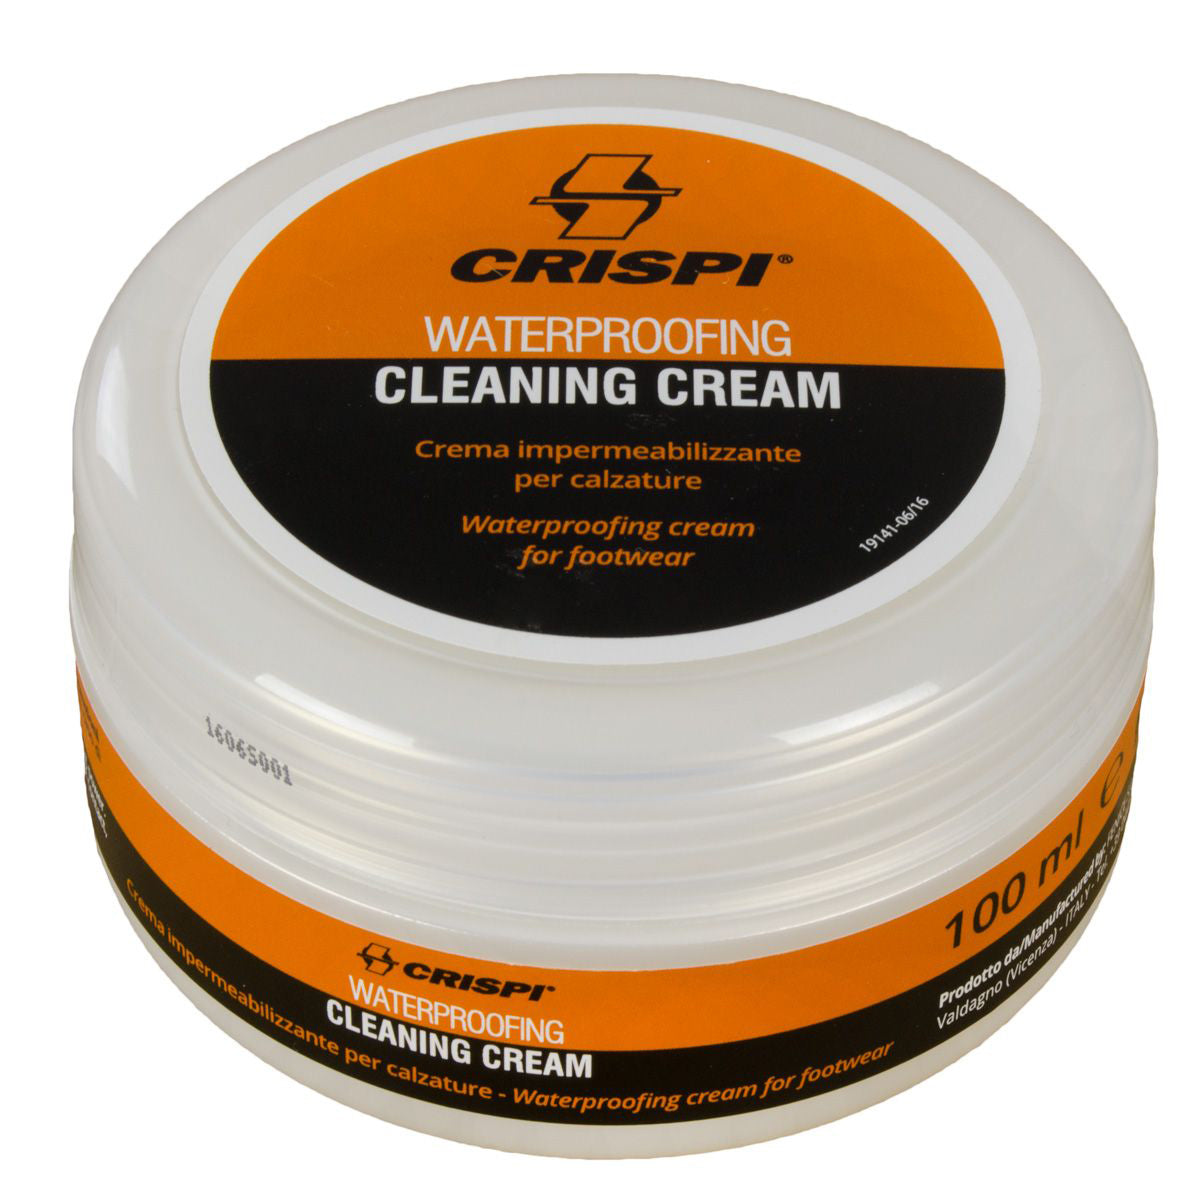 Crispi Waterproofing Cleaning Cream by Crispi | Footwear - goHUNT Shop